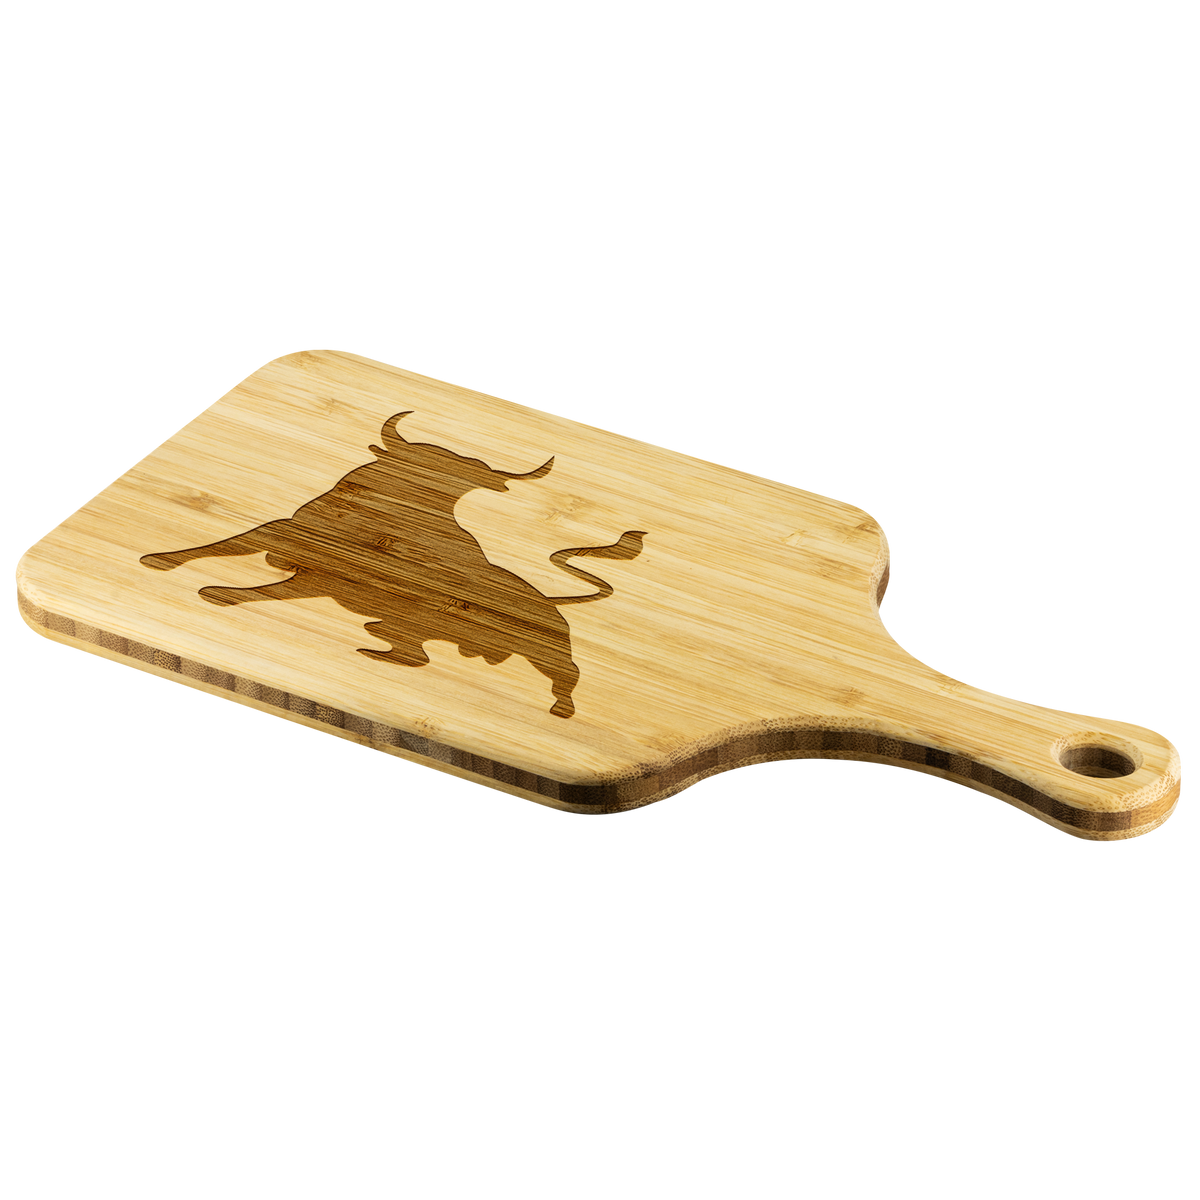 Wall Street bull - Wood cutting board with handle